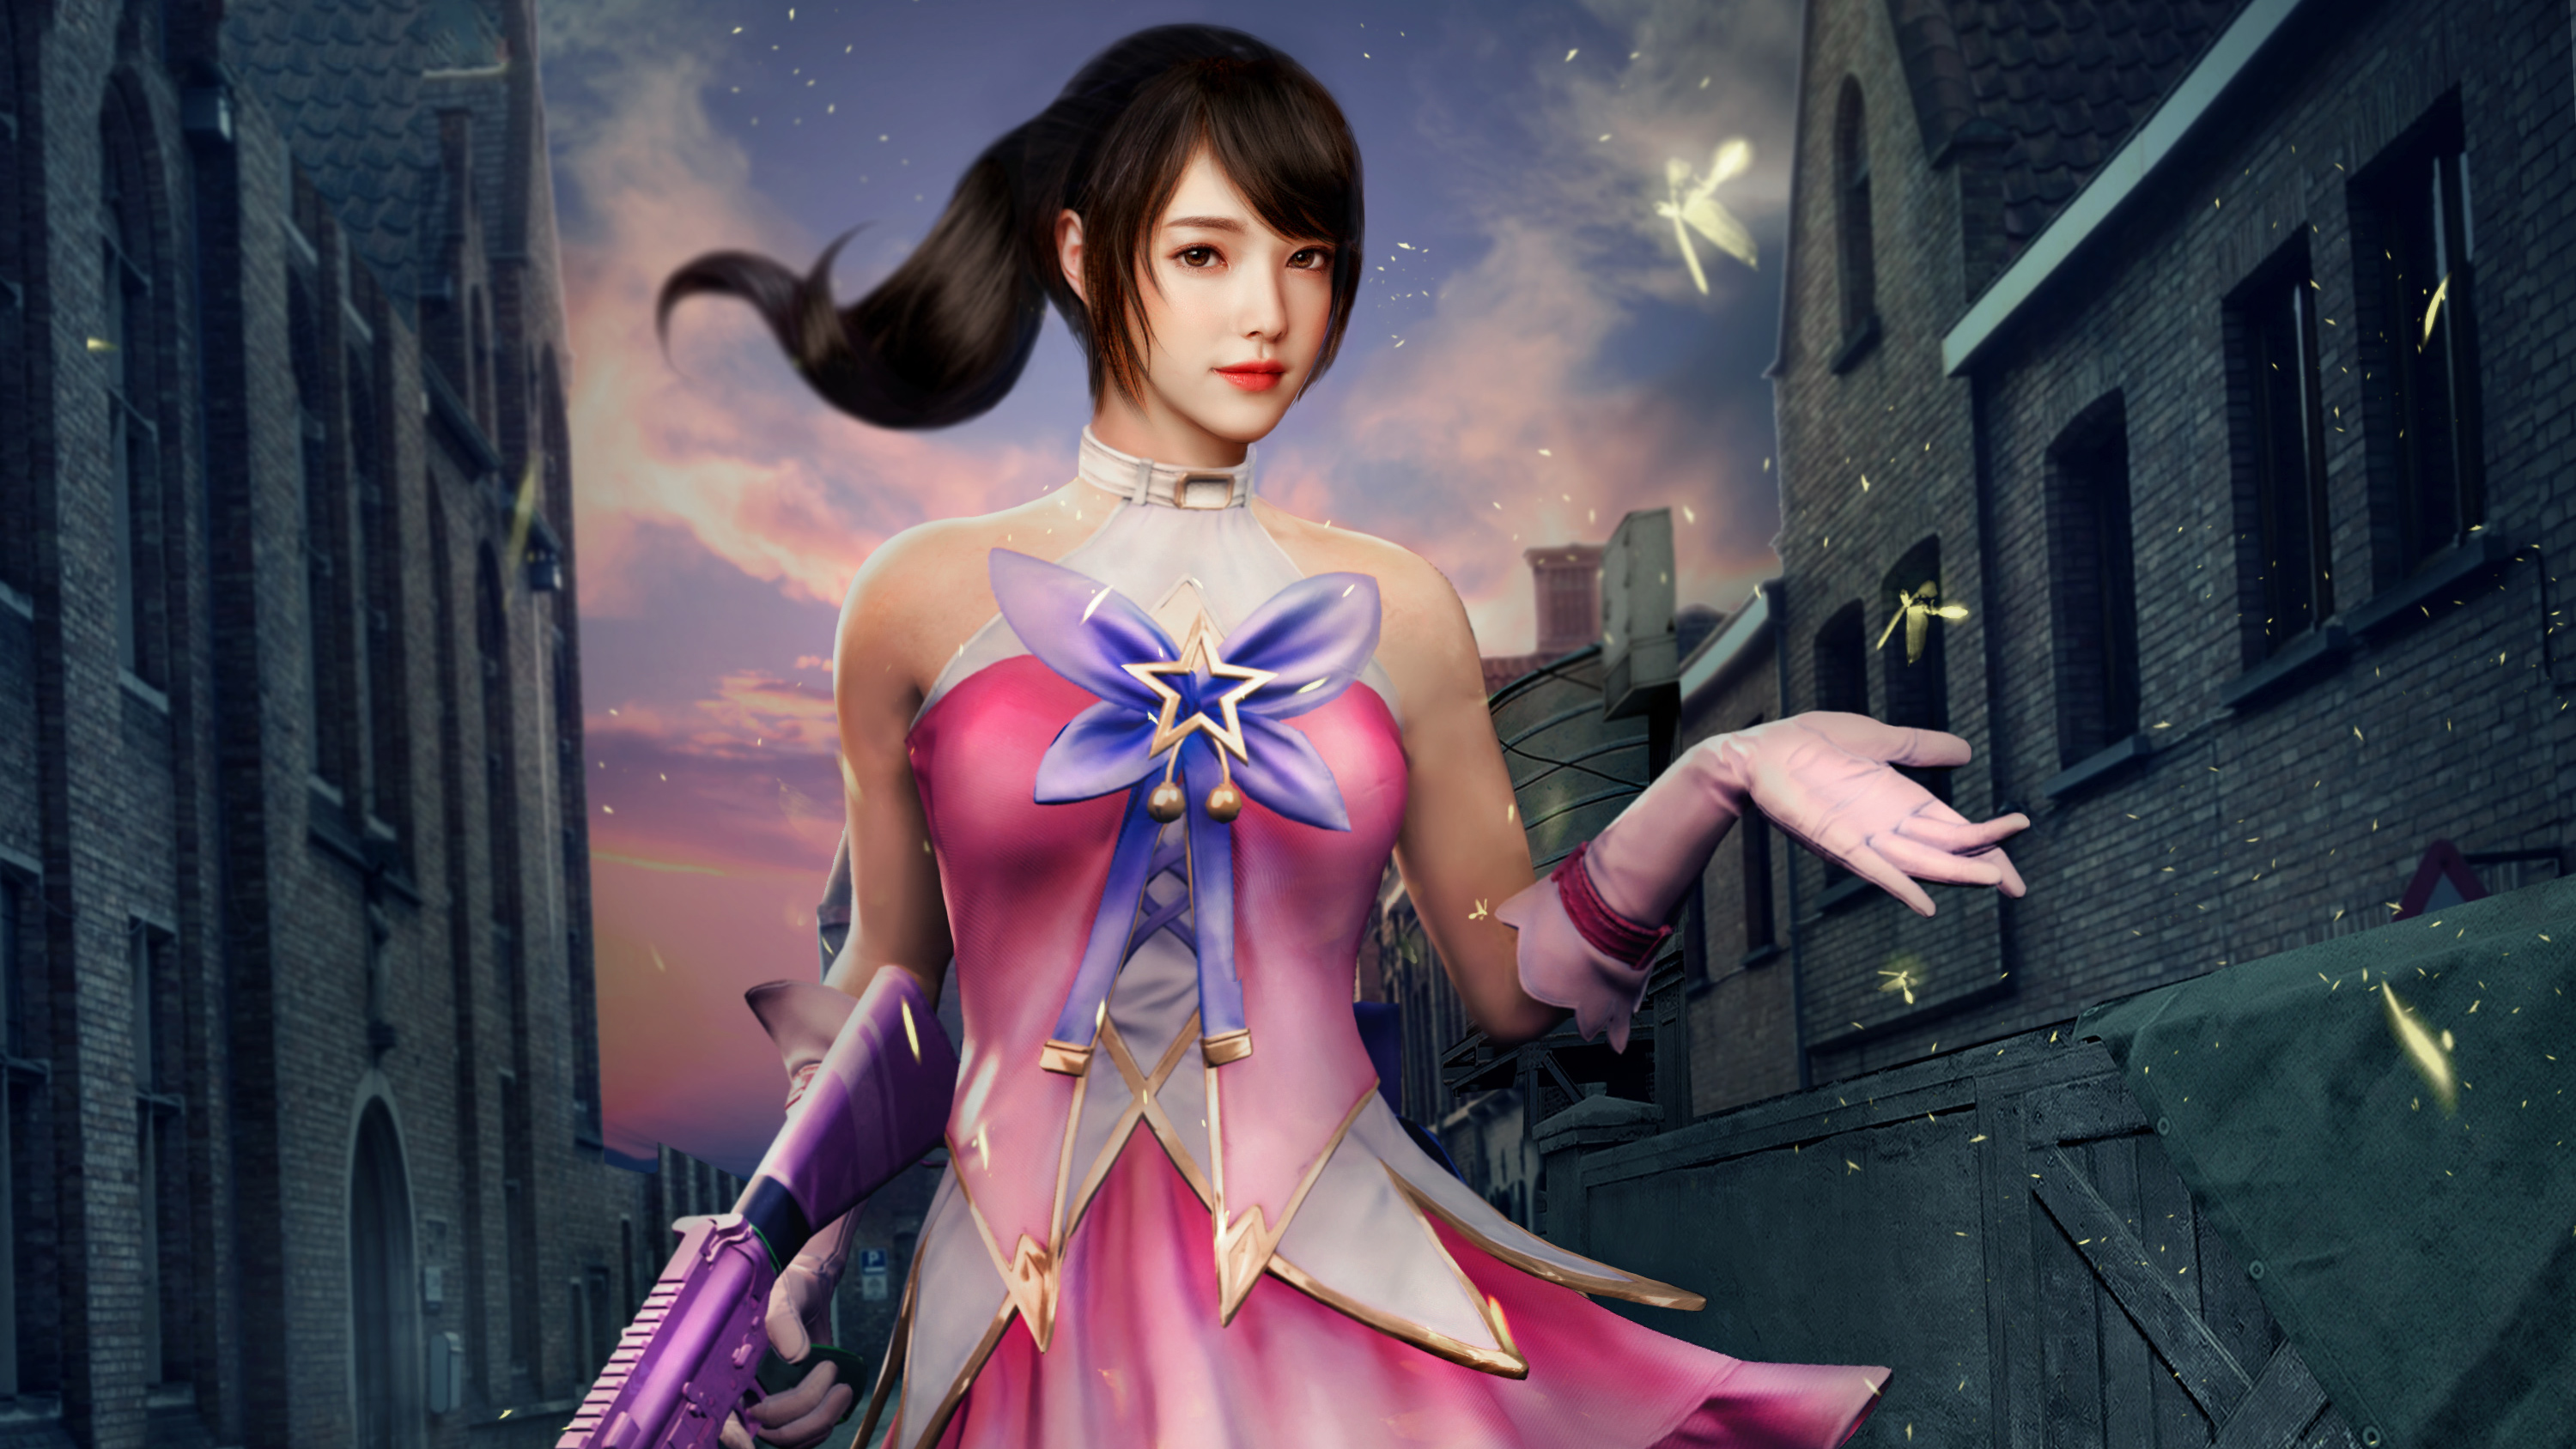 Anime Girl Pubg HD Games, 4k Wallpaper, Image, Background